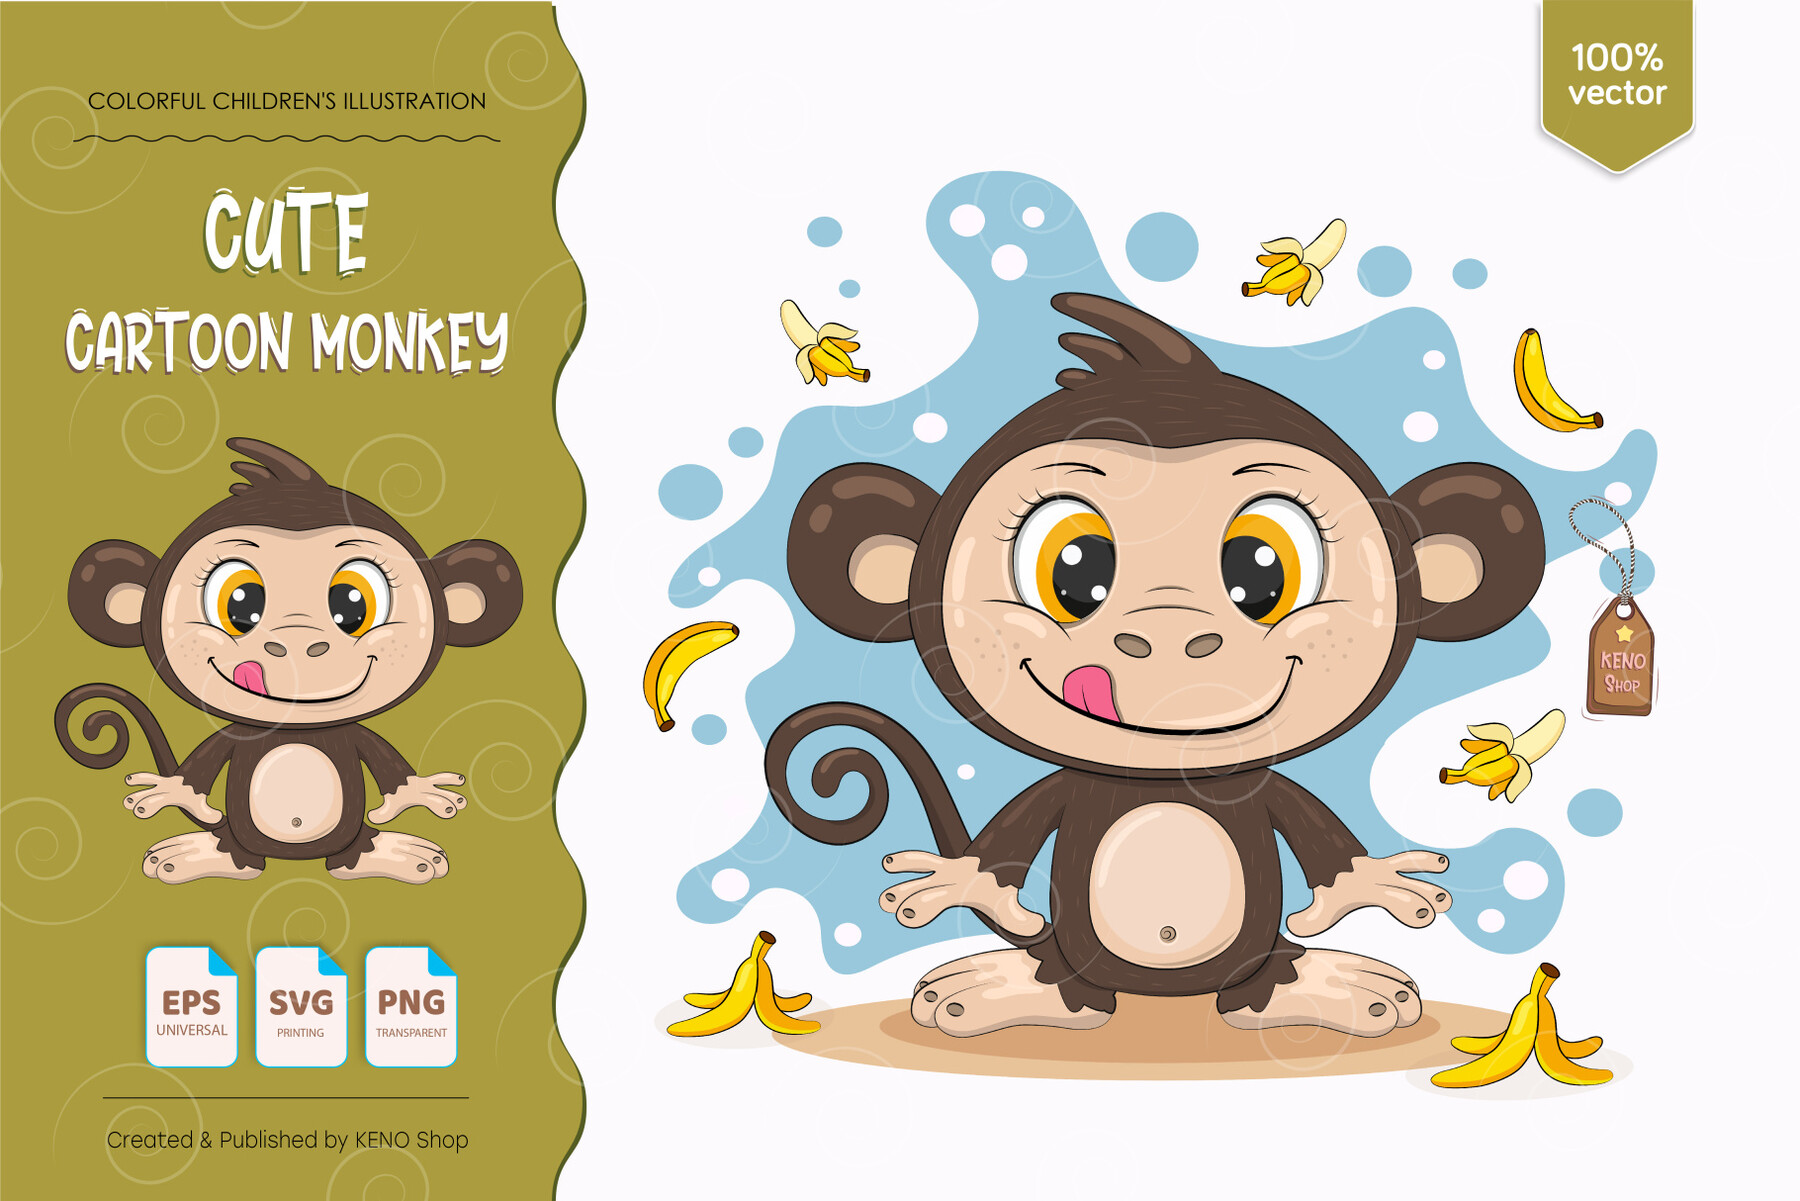 ArtStation - Cute Cartoon Monkey | Artworks